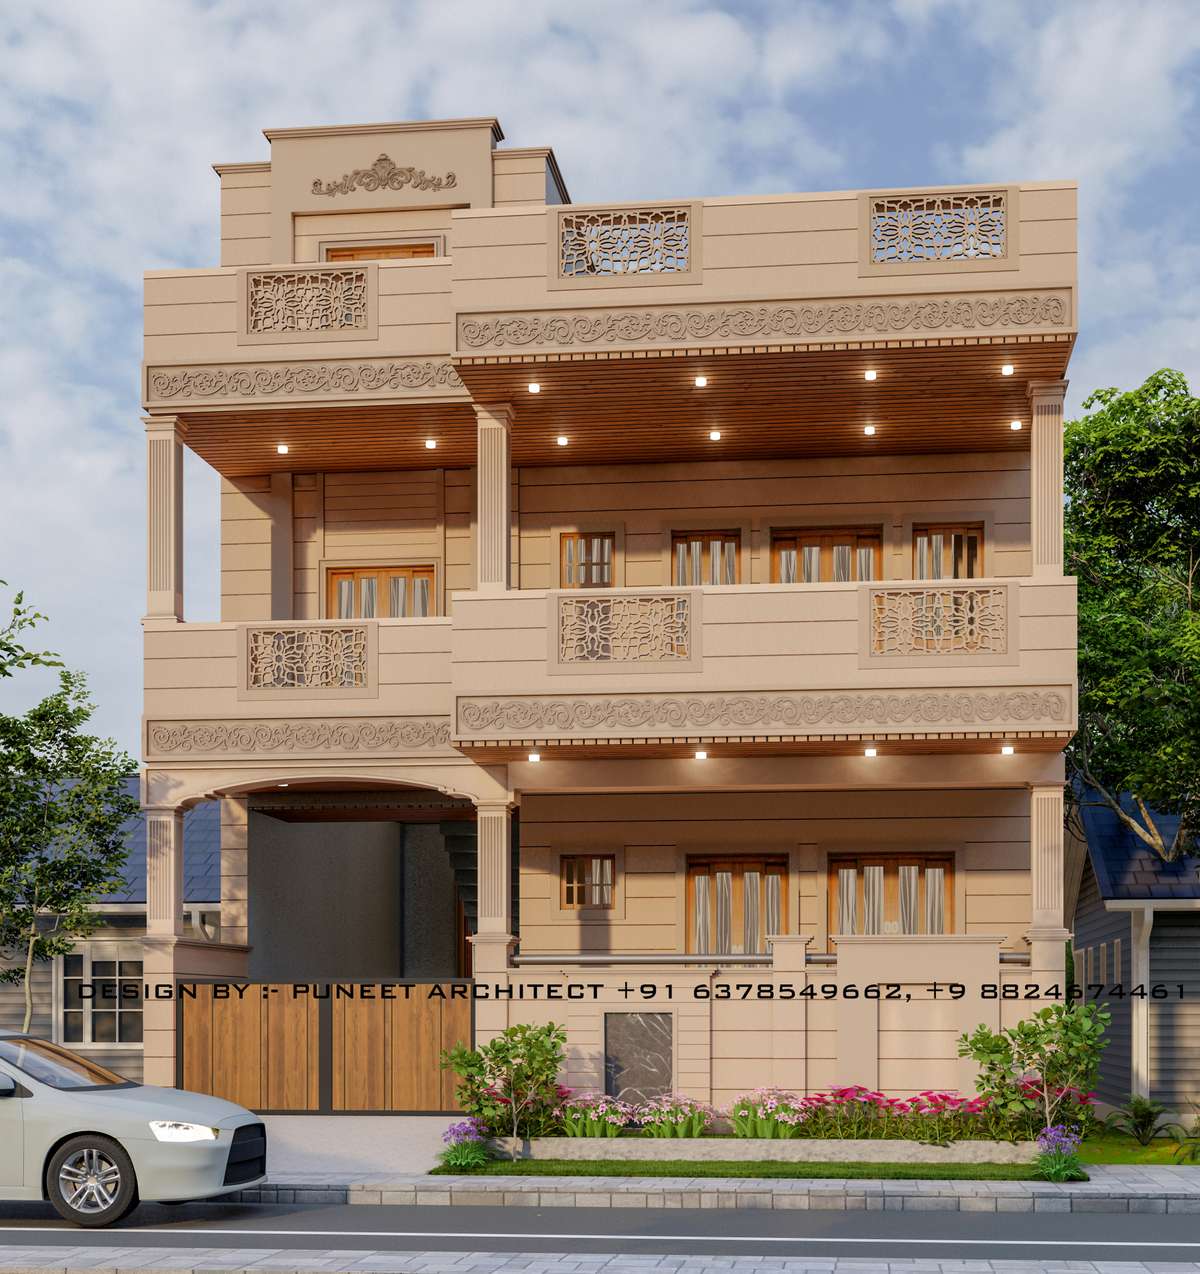 Designs by Architect Pushpendra Singh Parihar, Jodhpur | Kolo